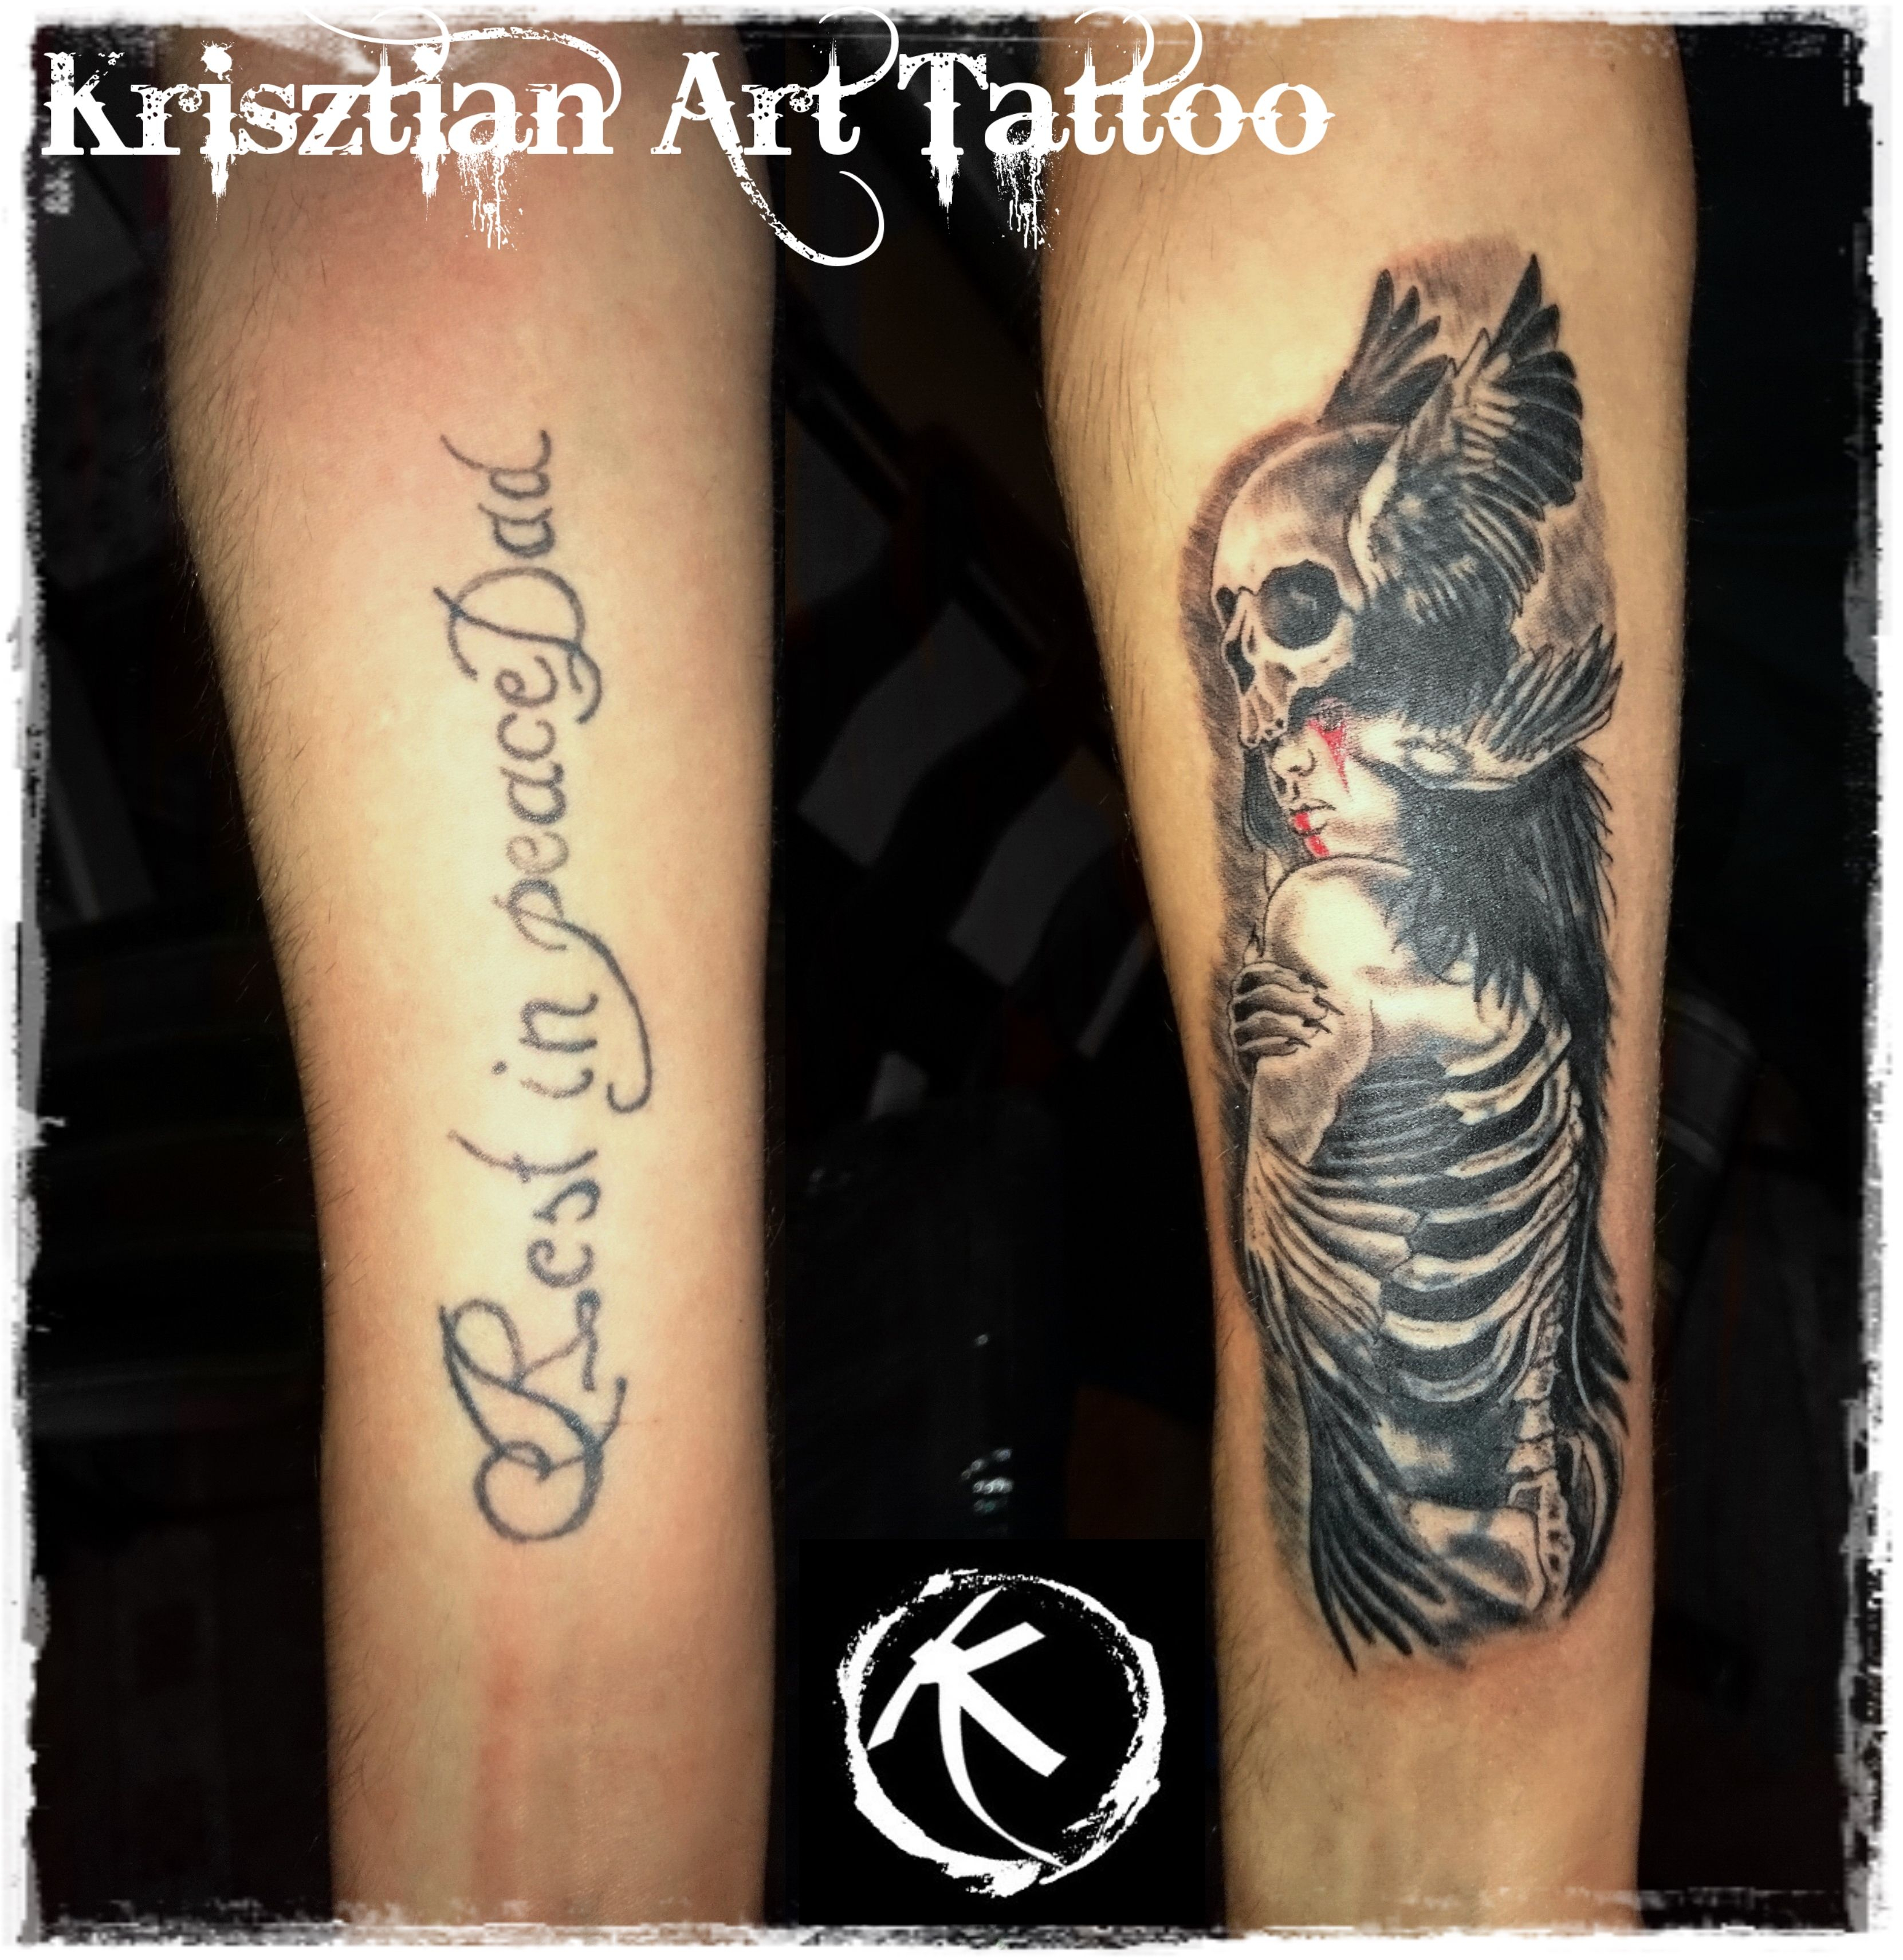 Krisztian Art Tattoo Cover Up Tattoo Forearm Skull And Girl regarding measurements 3322 X 3422